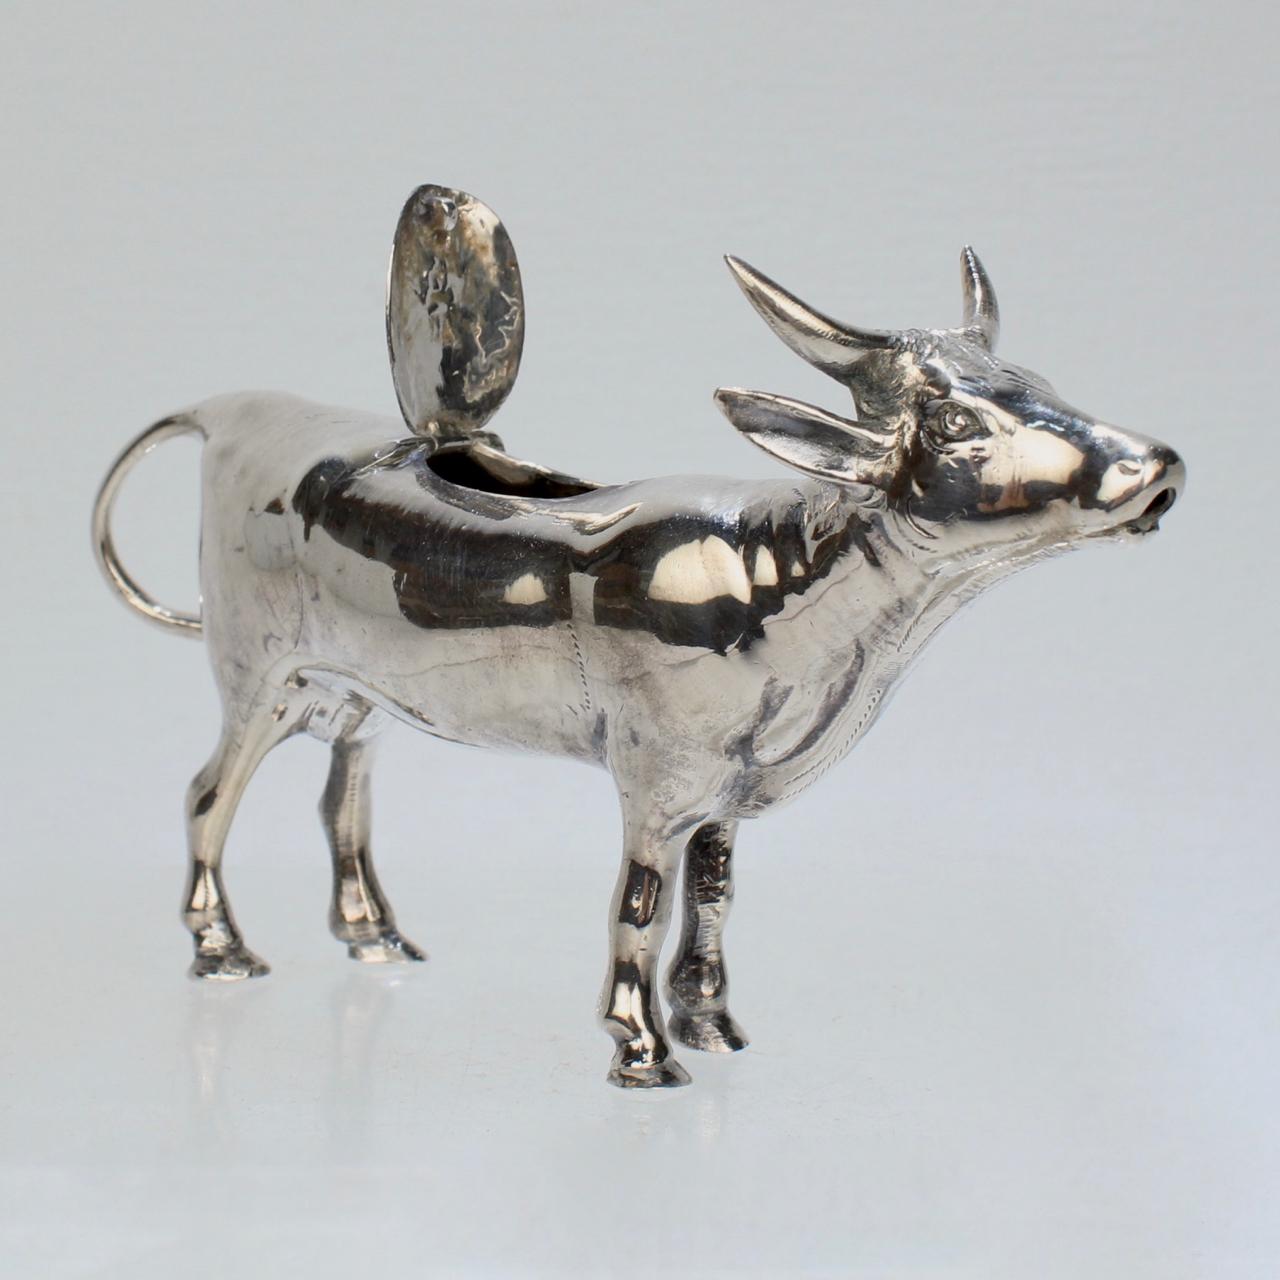 Figural Israel & Son Ltd. Sterling Silver Cow Creamer or Milk Pitcher For Sale 2